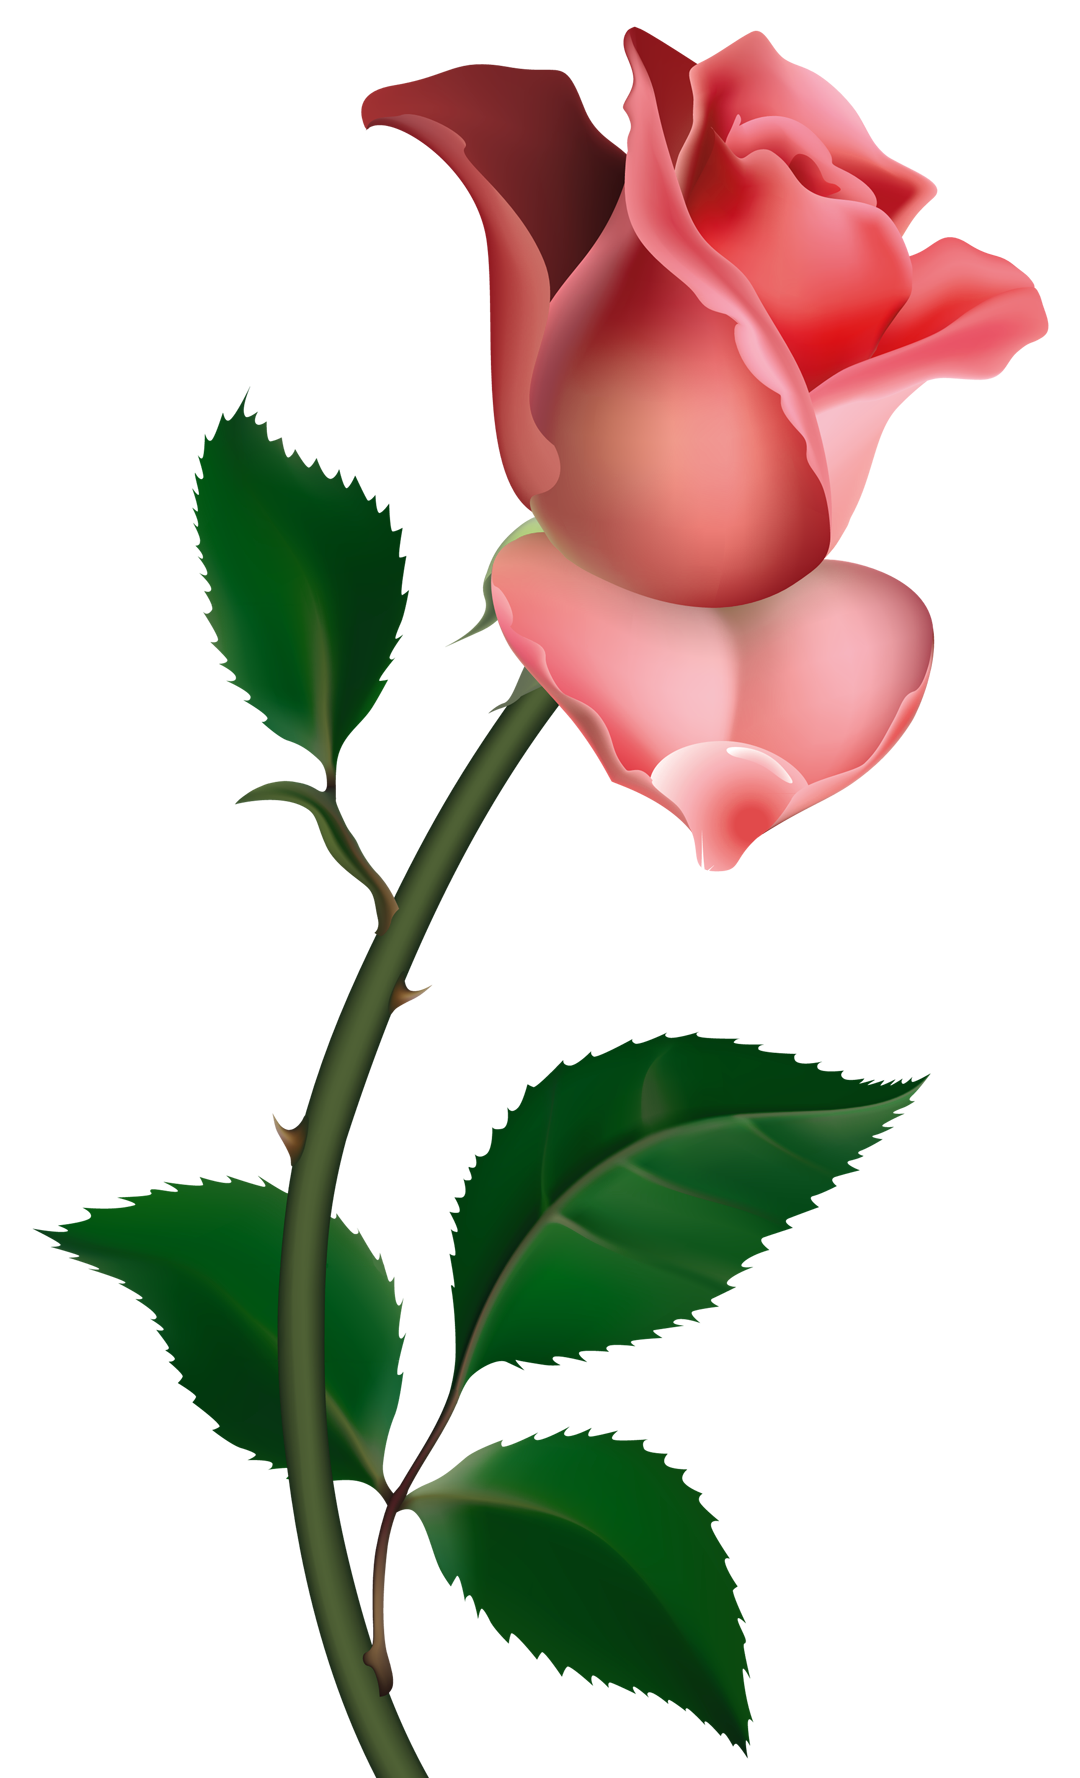 Best clipart rose - ClipartFox